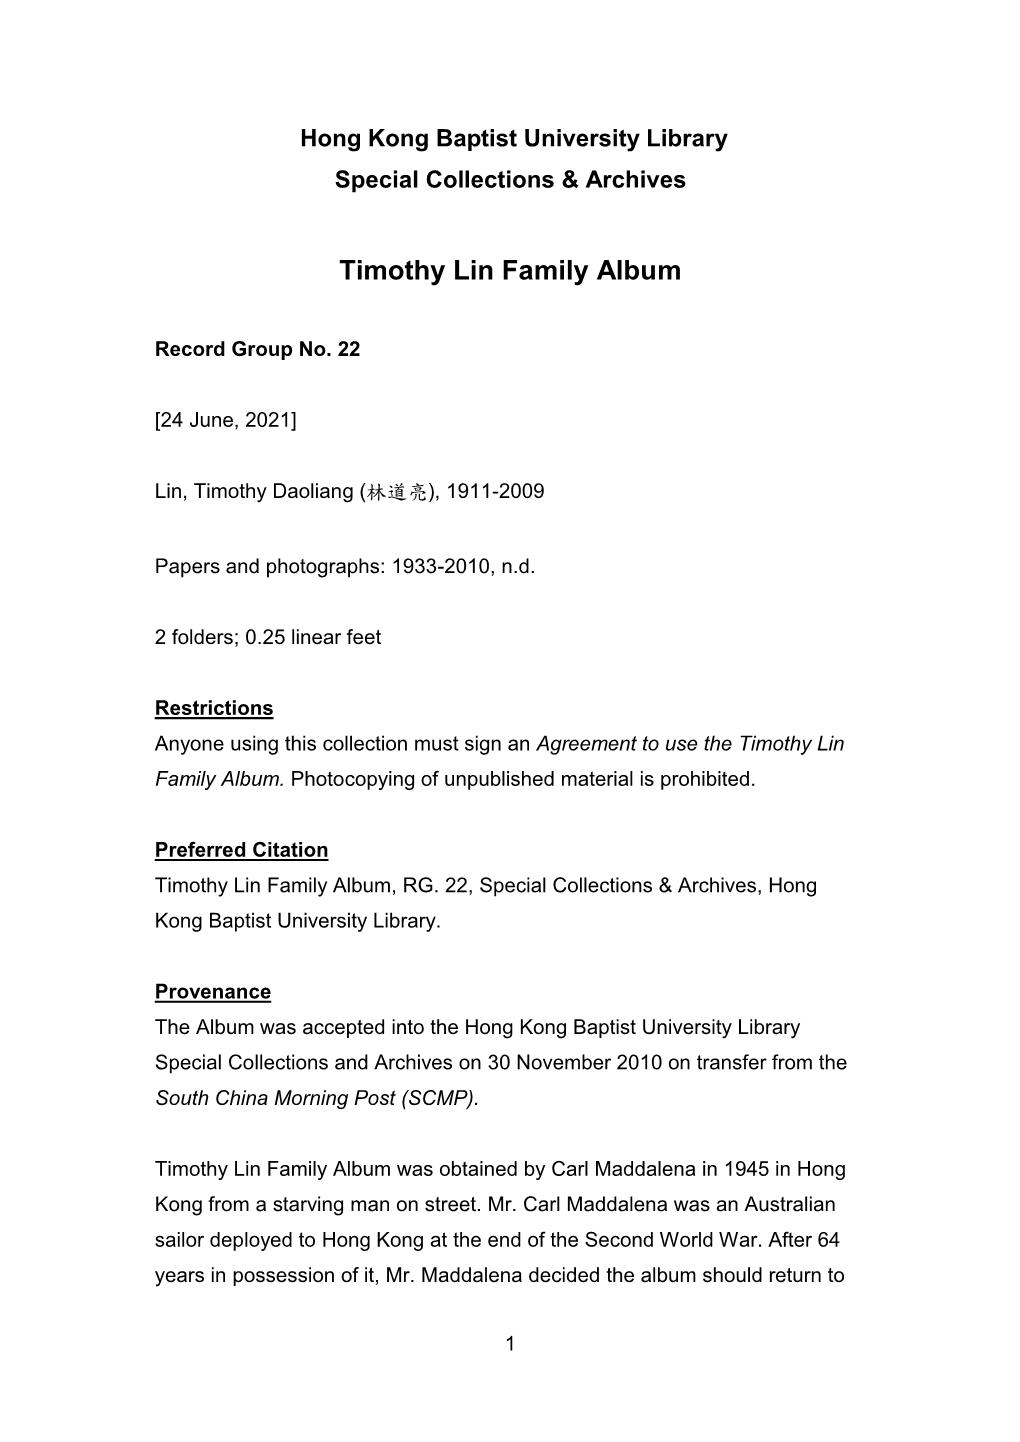 Timothy Lin Family Album